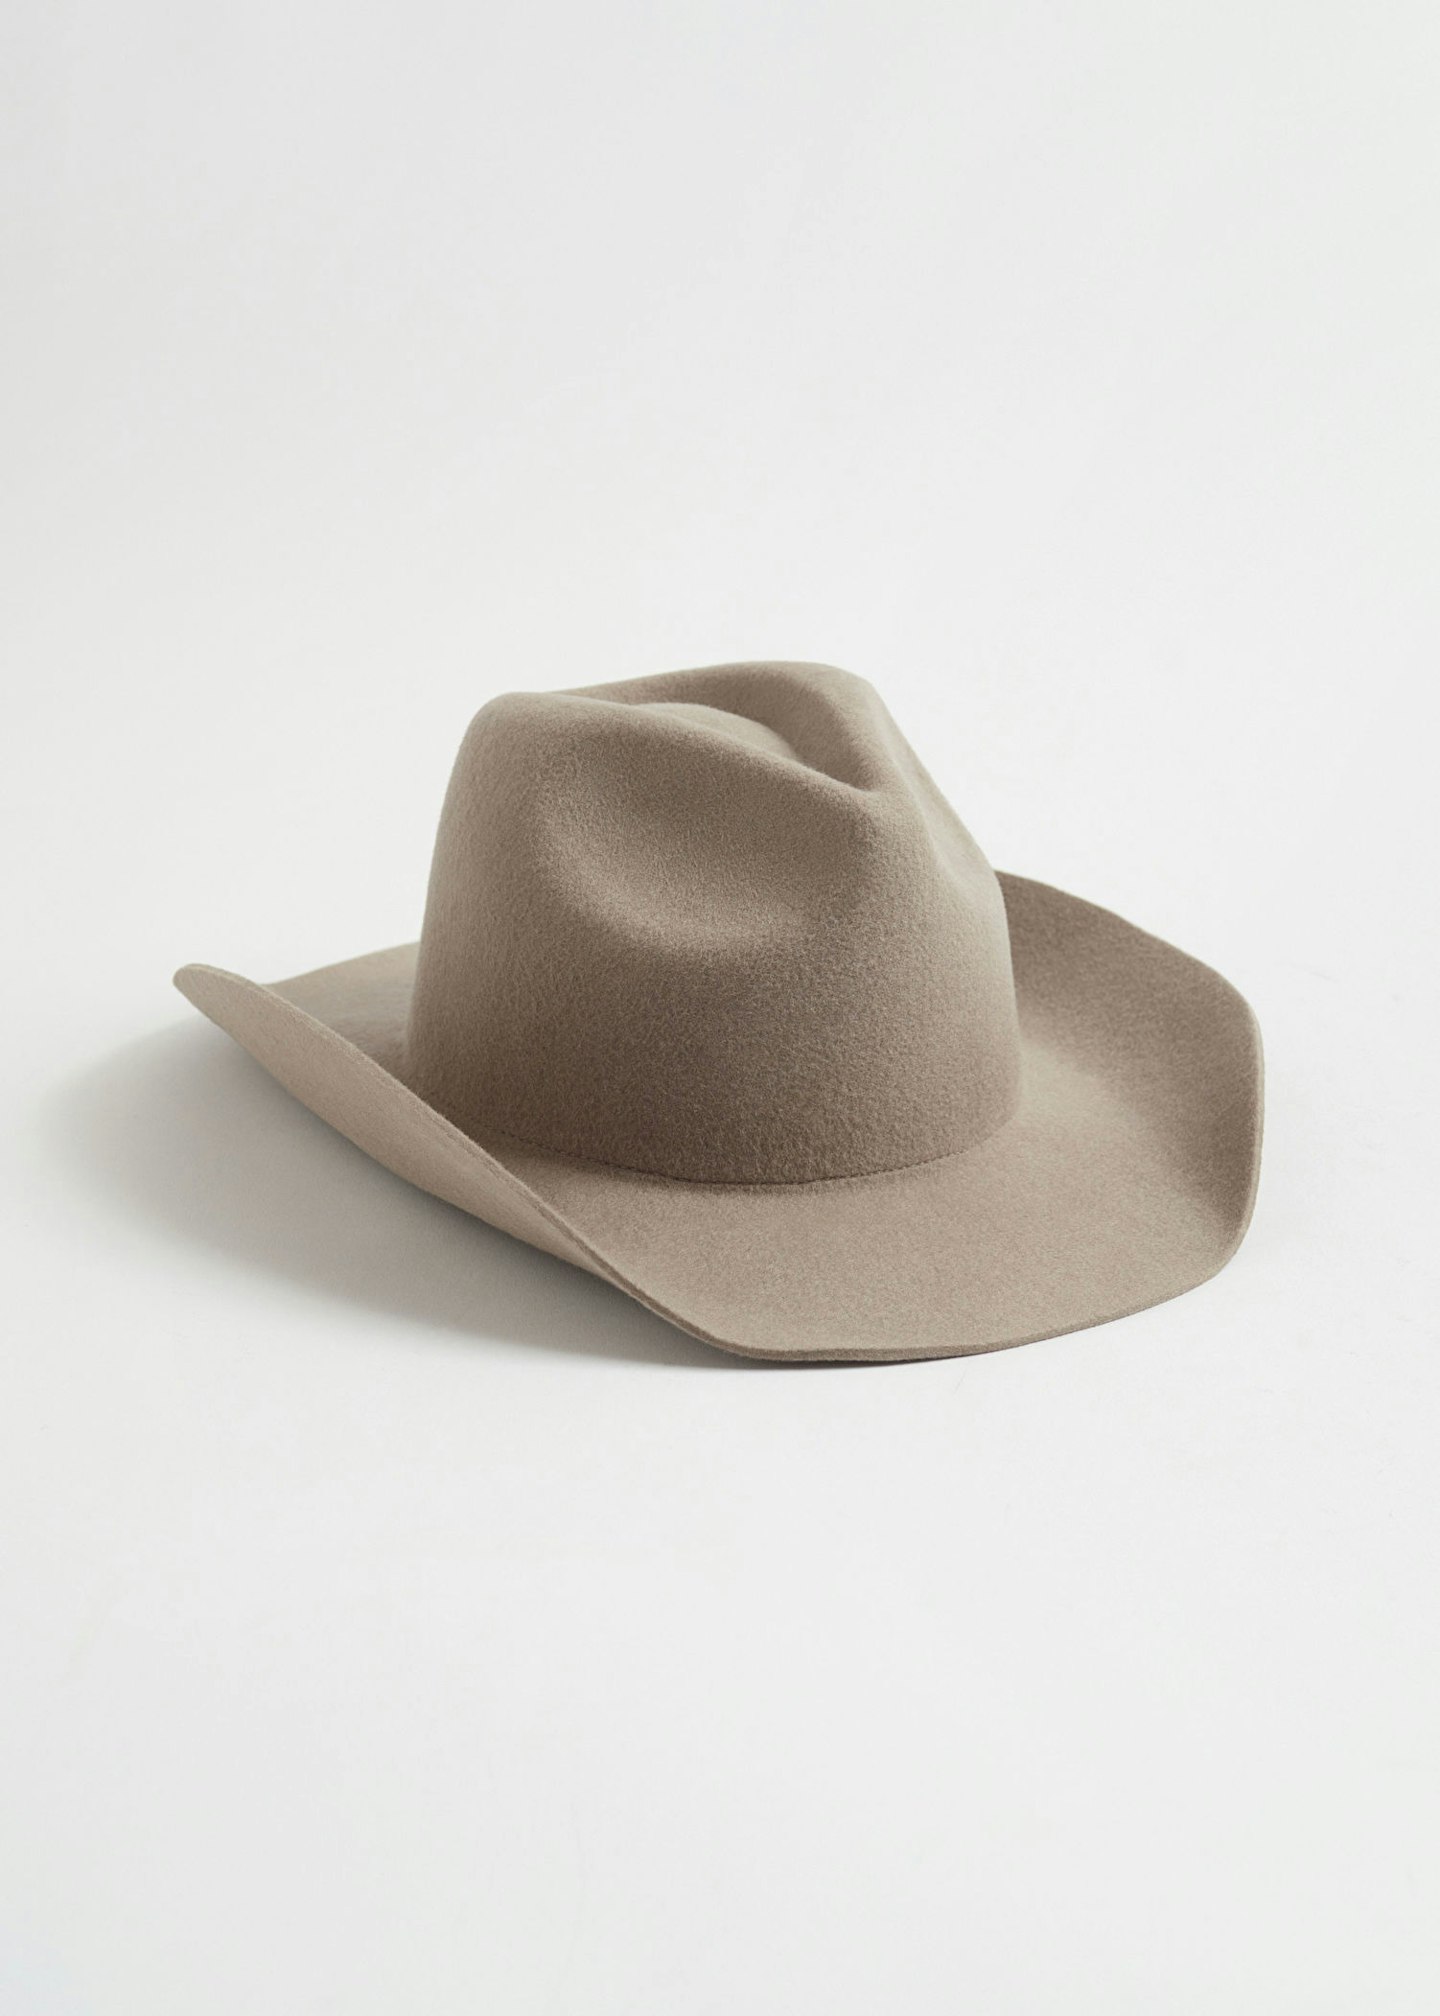 & Other Stories, Felt Western Hat